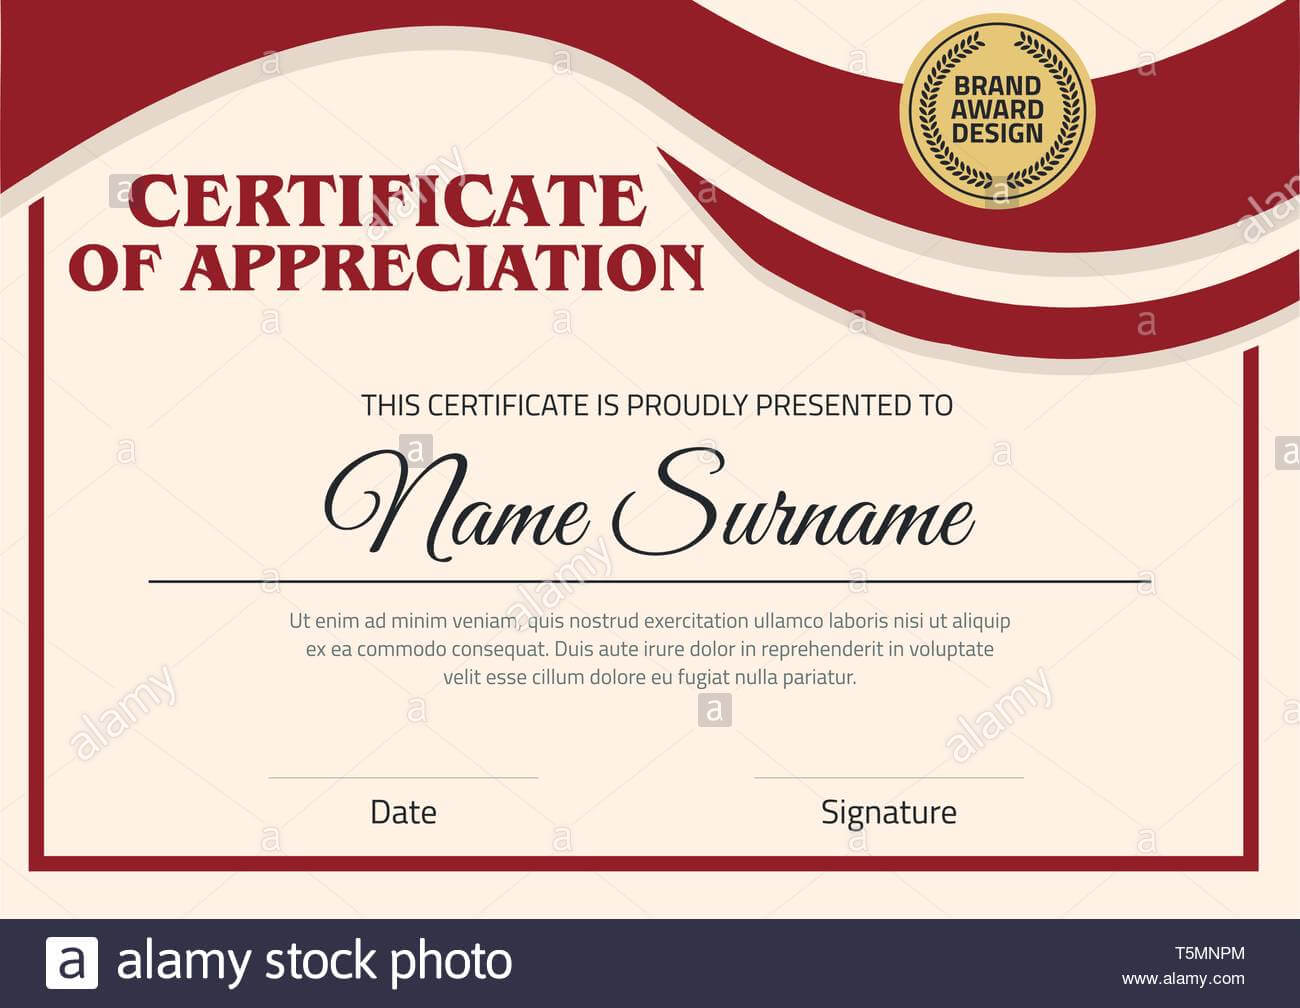 Vector Certificate Template. Illustration Certificate In A4 With Certificate Template Size